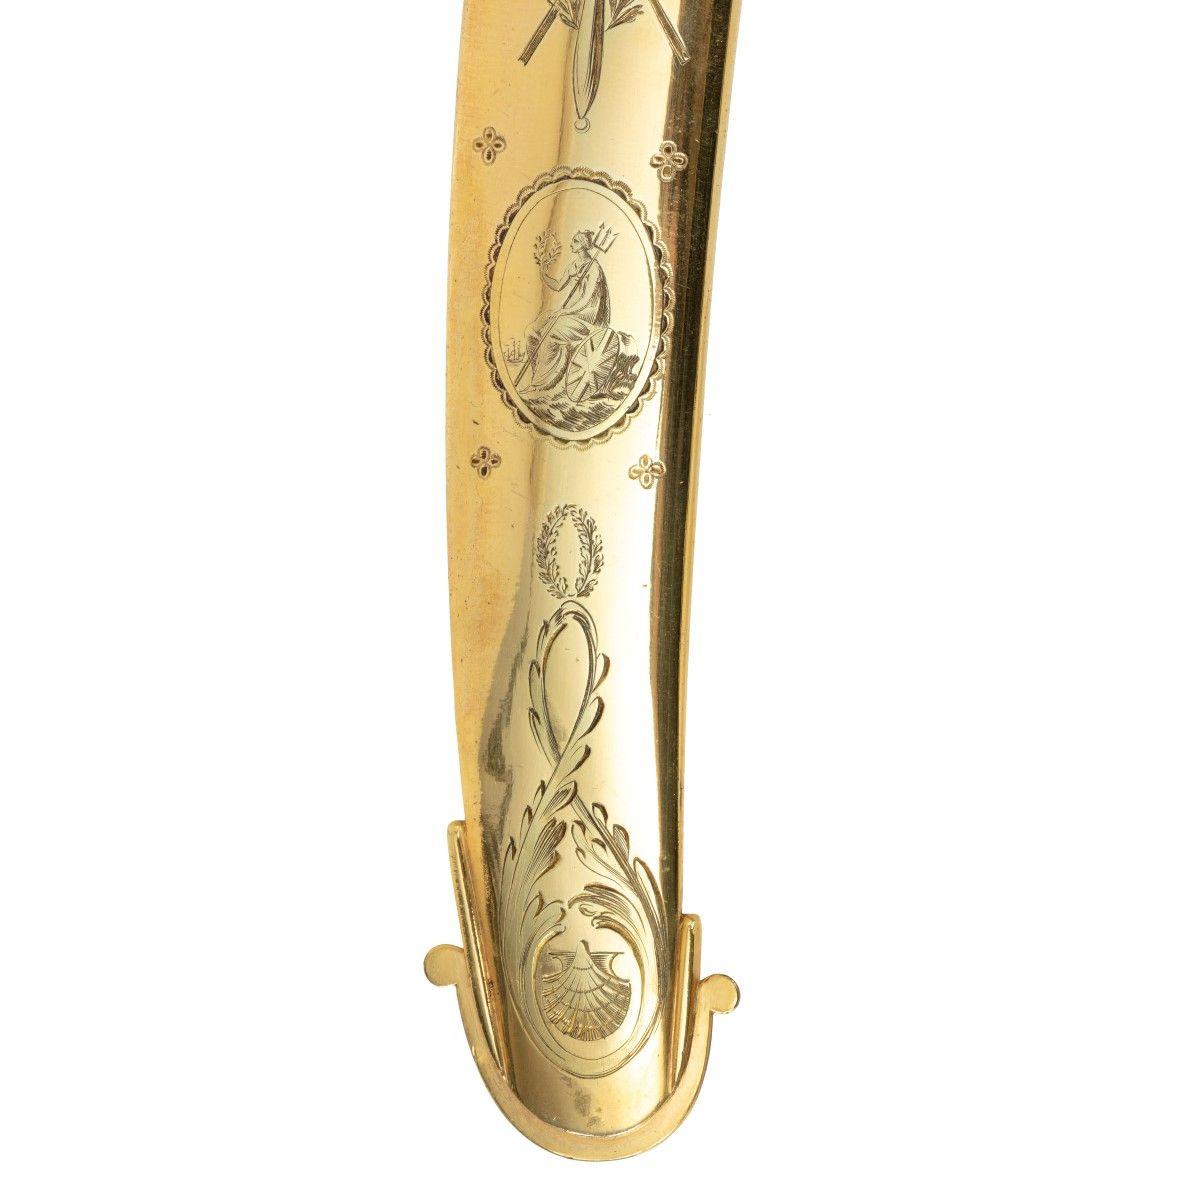 Midshipman Proctor’s Sword for Valour at the Battle of Copenhagen For Sale 8